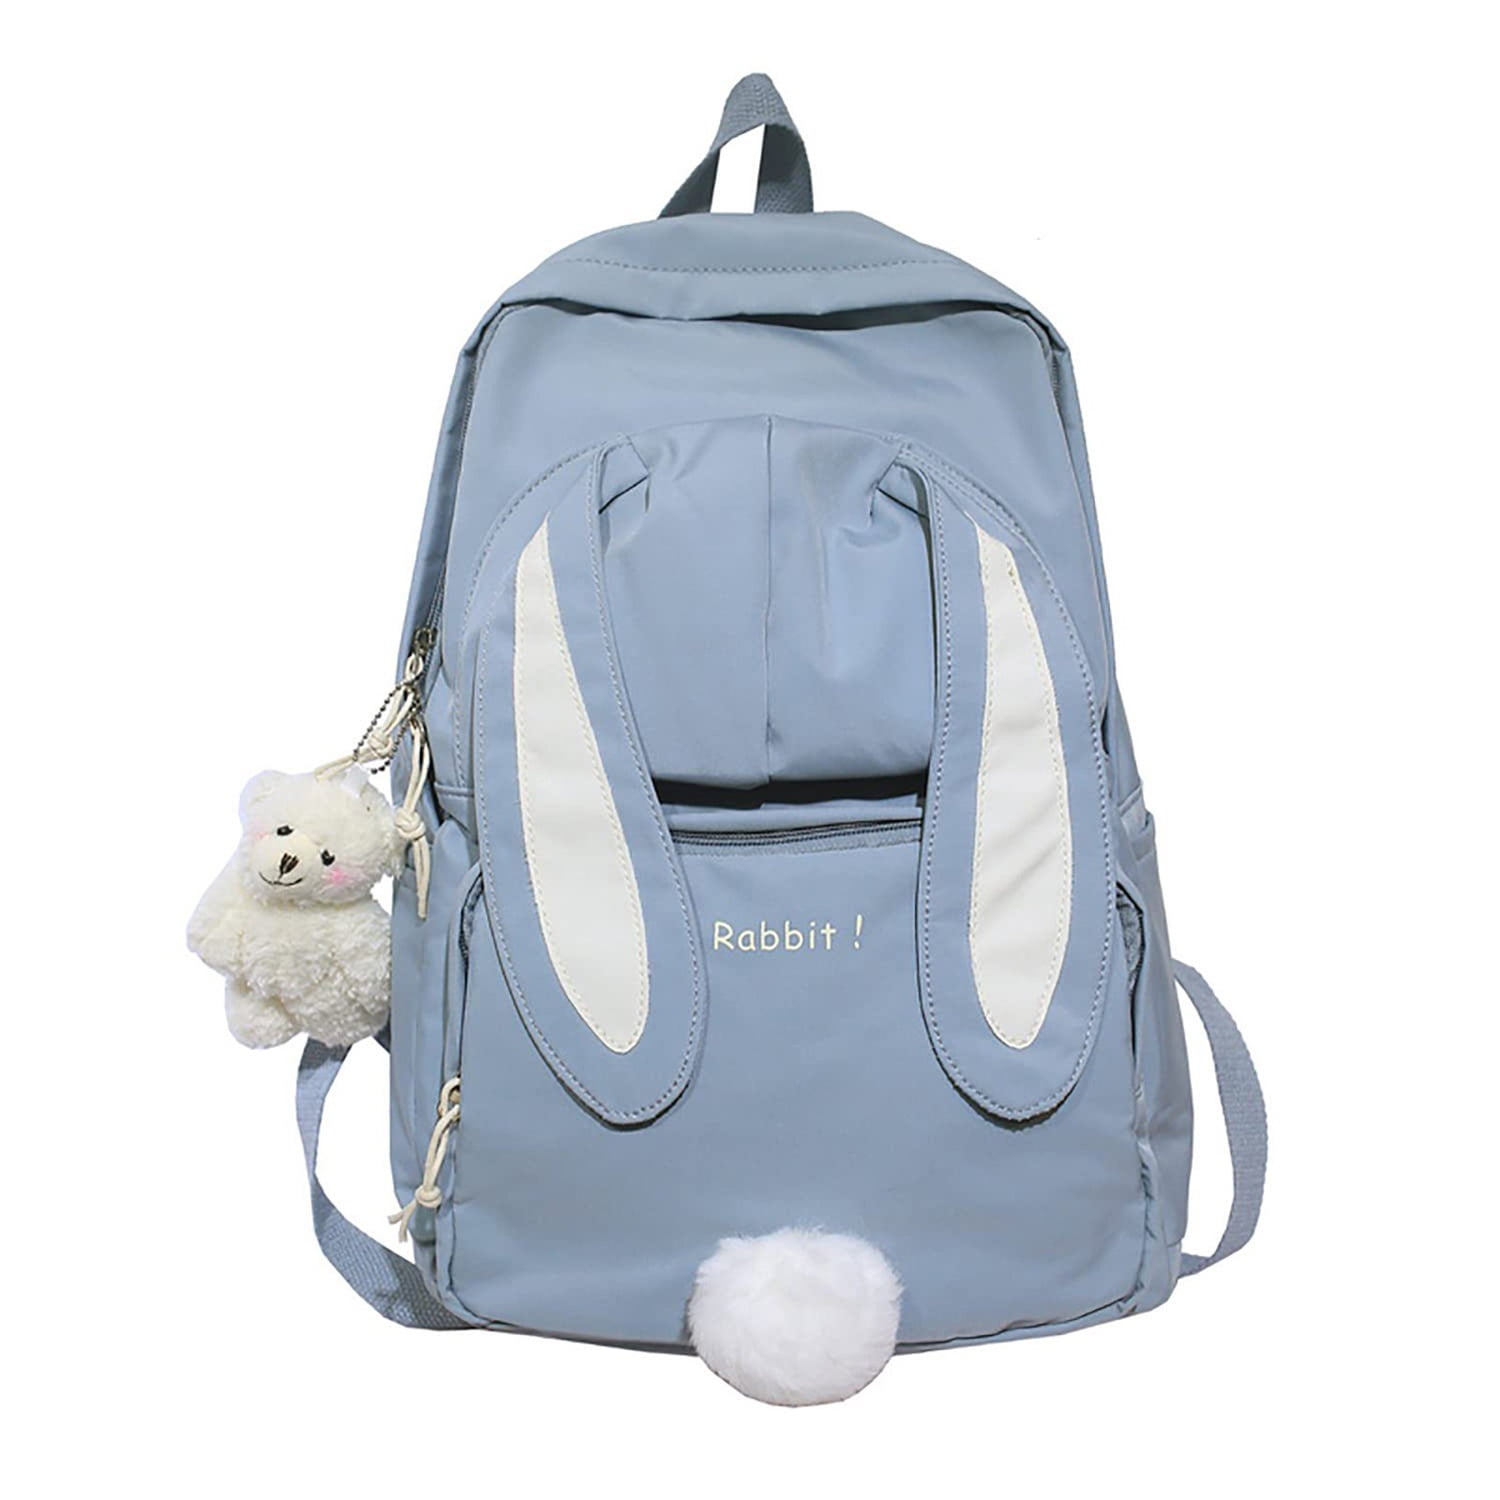 Black and Silver Bunny Backpack Bunny Backpack Bunny Bag 